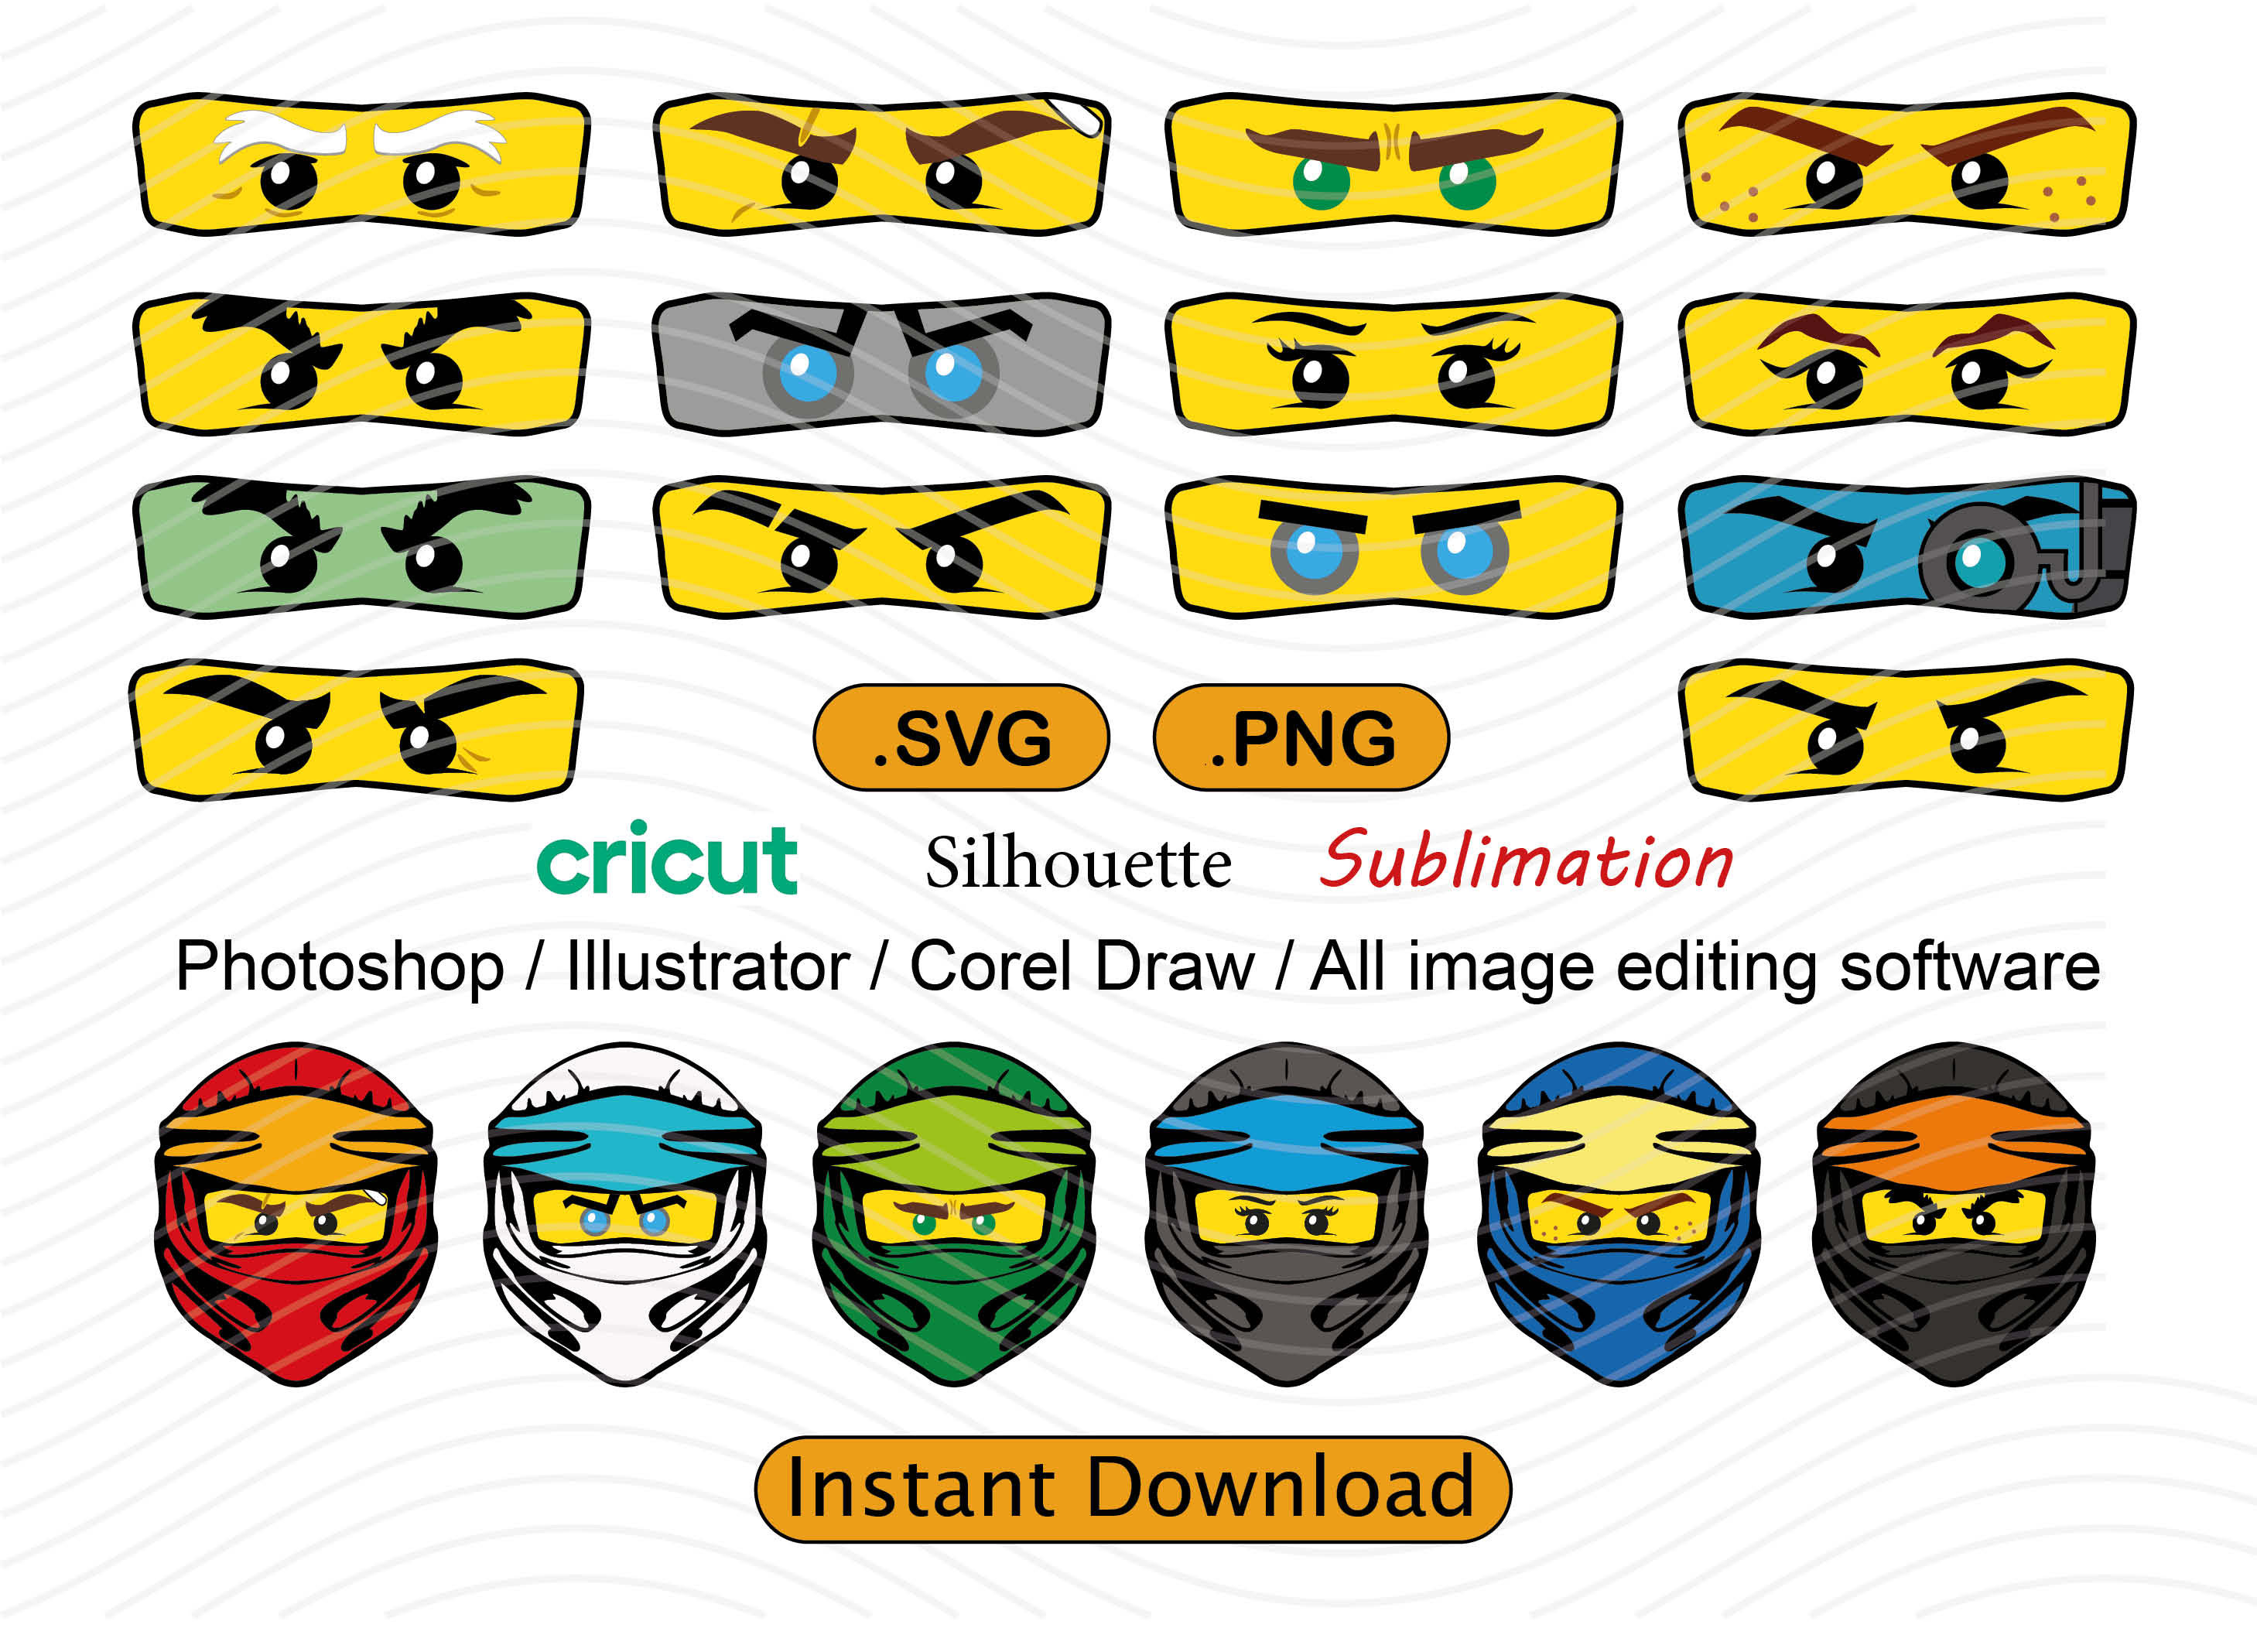 4617163 Ninjago Eyes Sticker, Ninjago Wiki